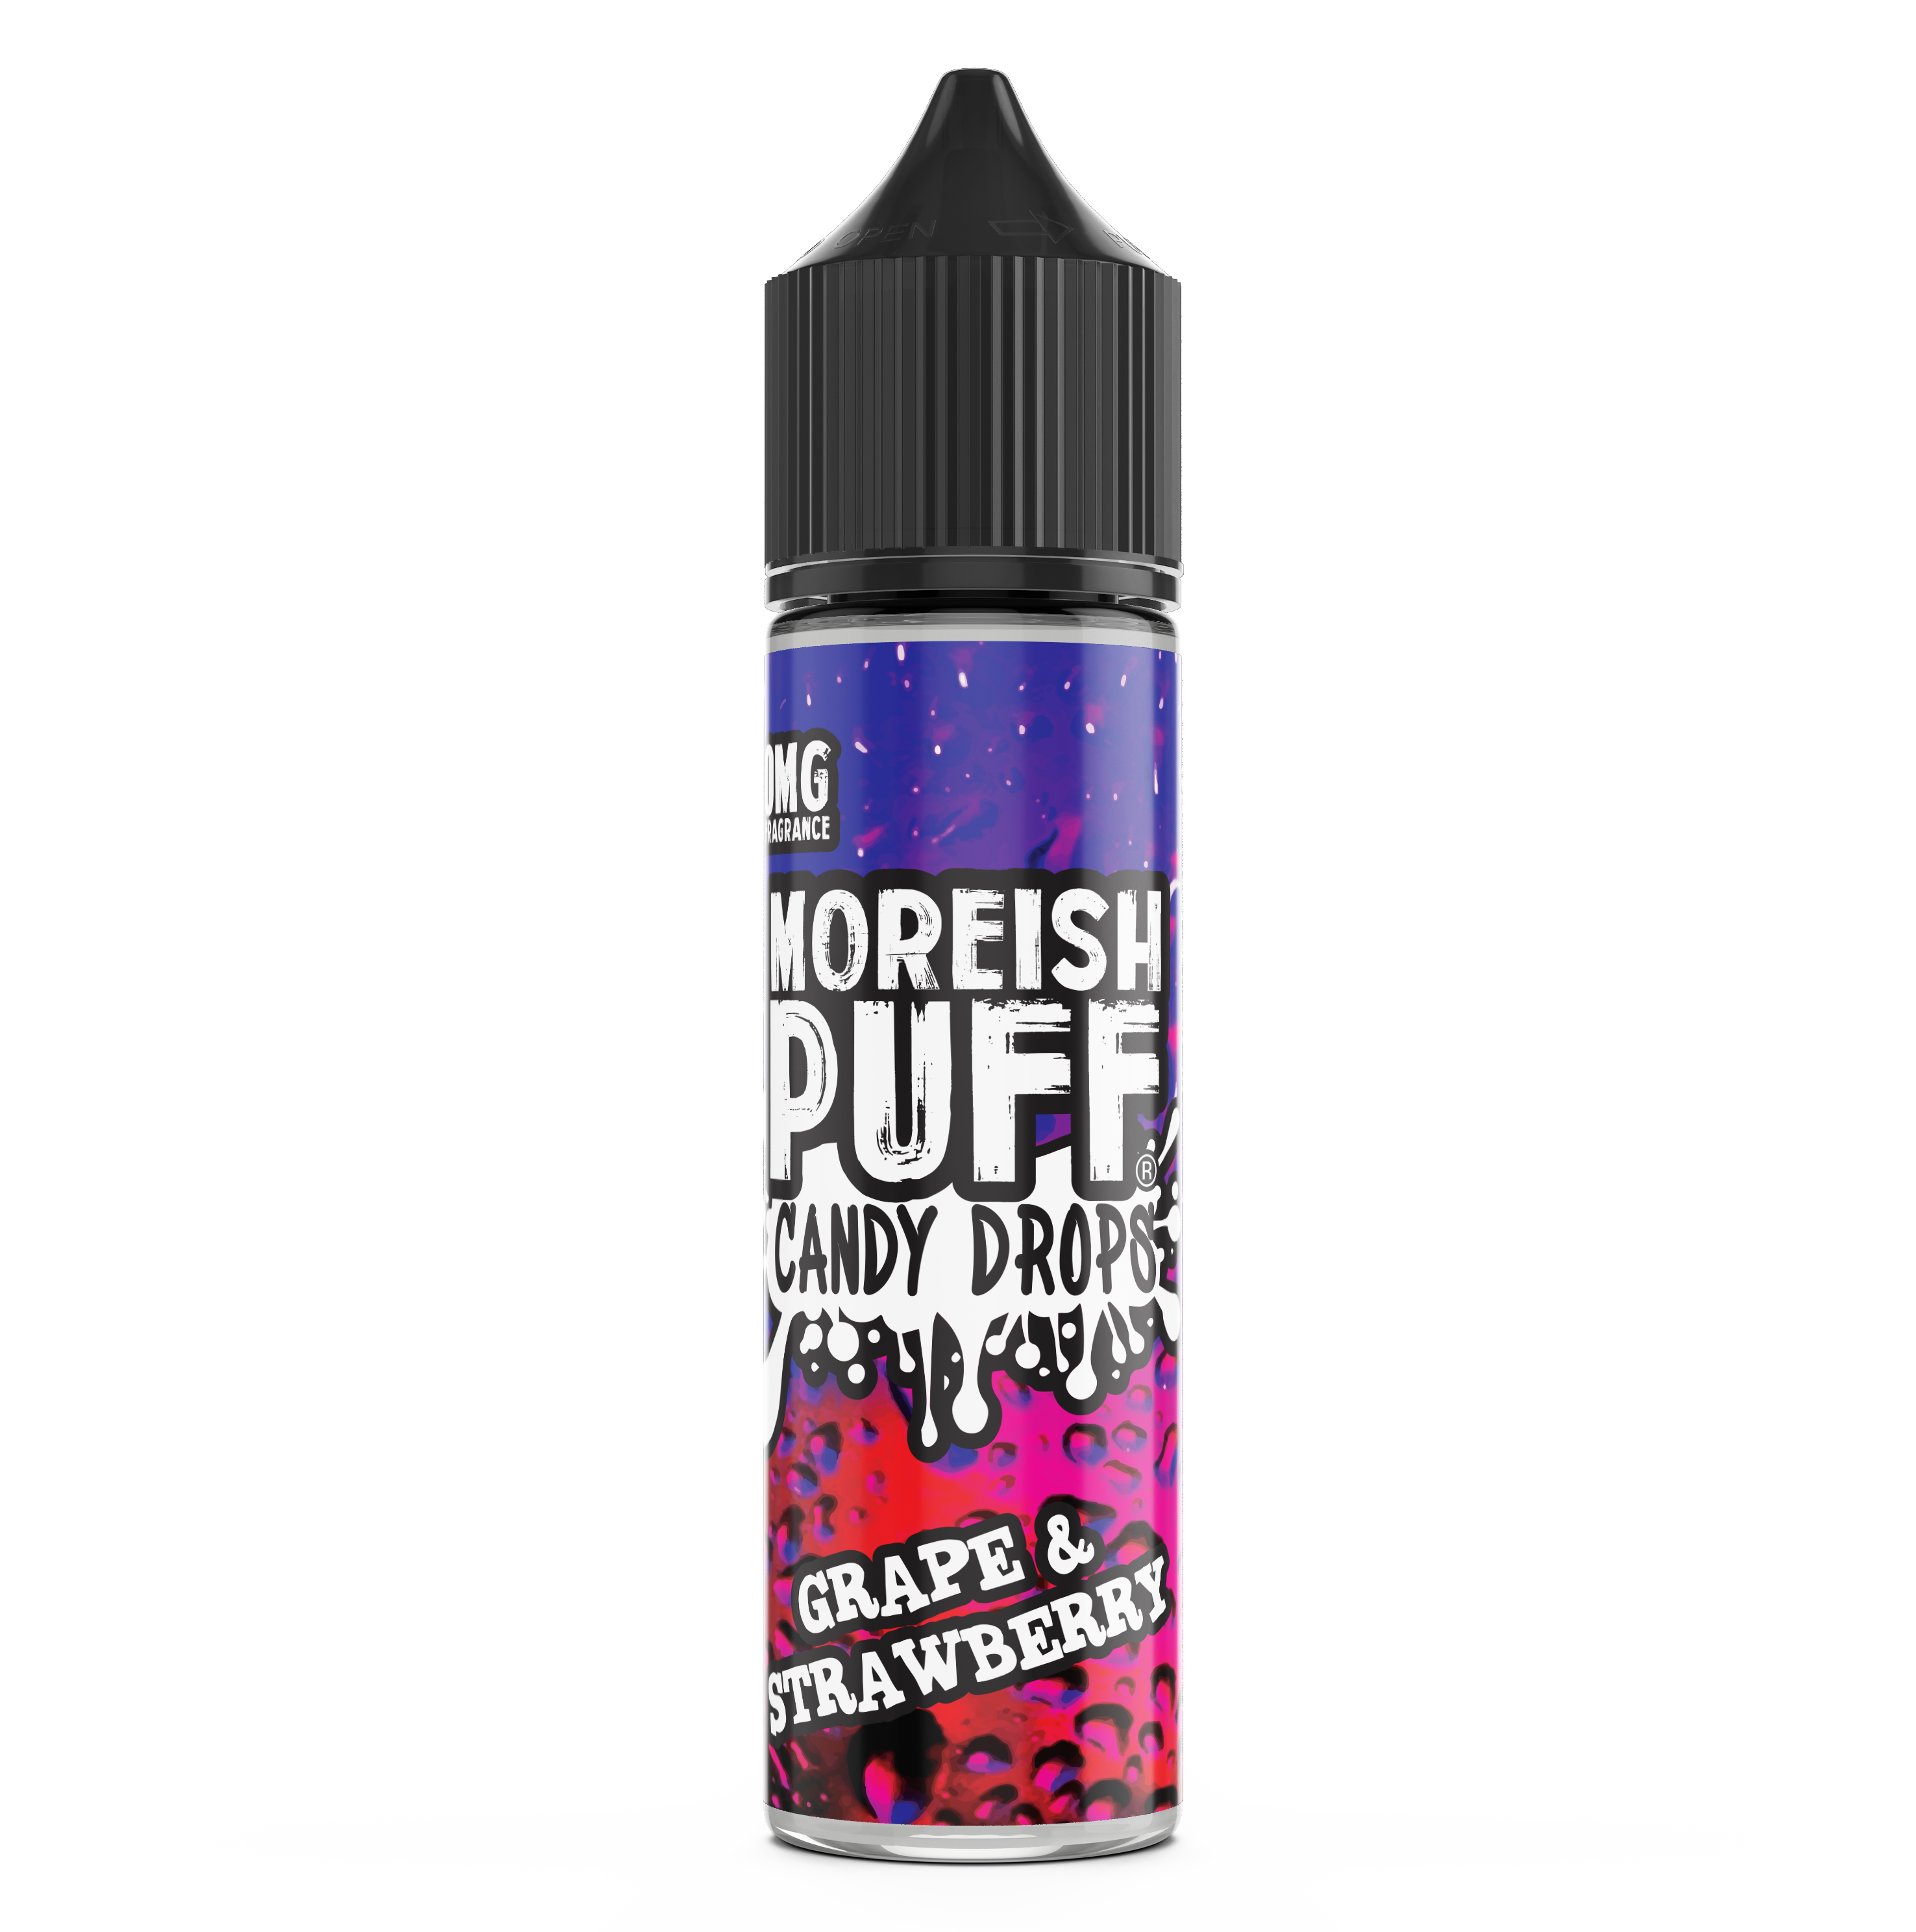 Moreish Puff Candy Drops: Grape & Strawberry Candy Drops 0mg 50ml Shortfill E-Liquid